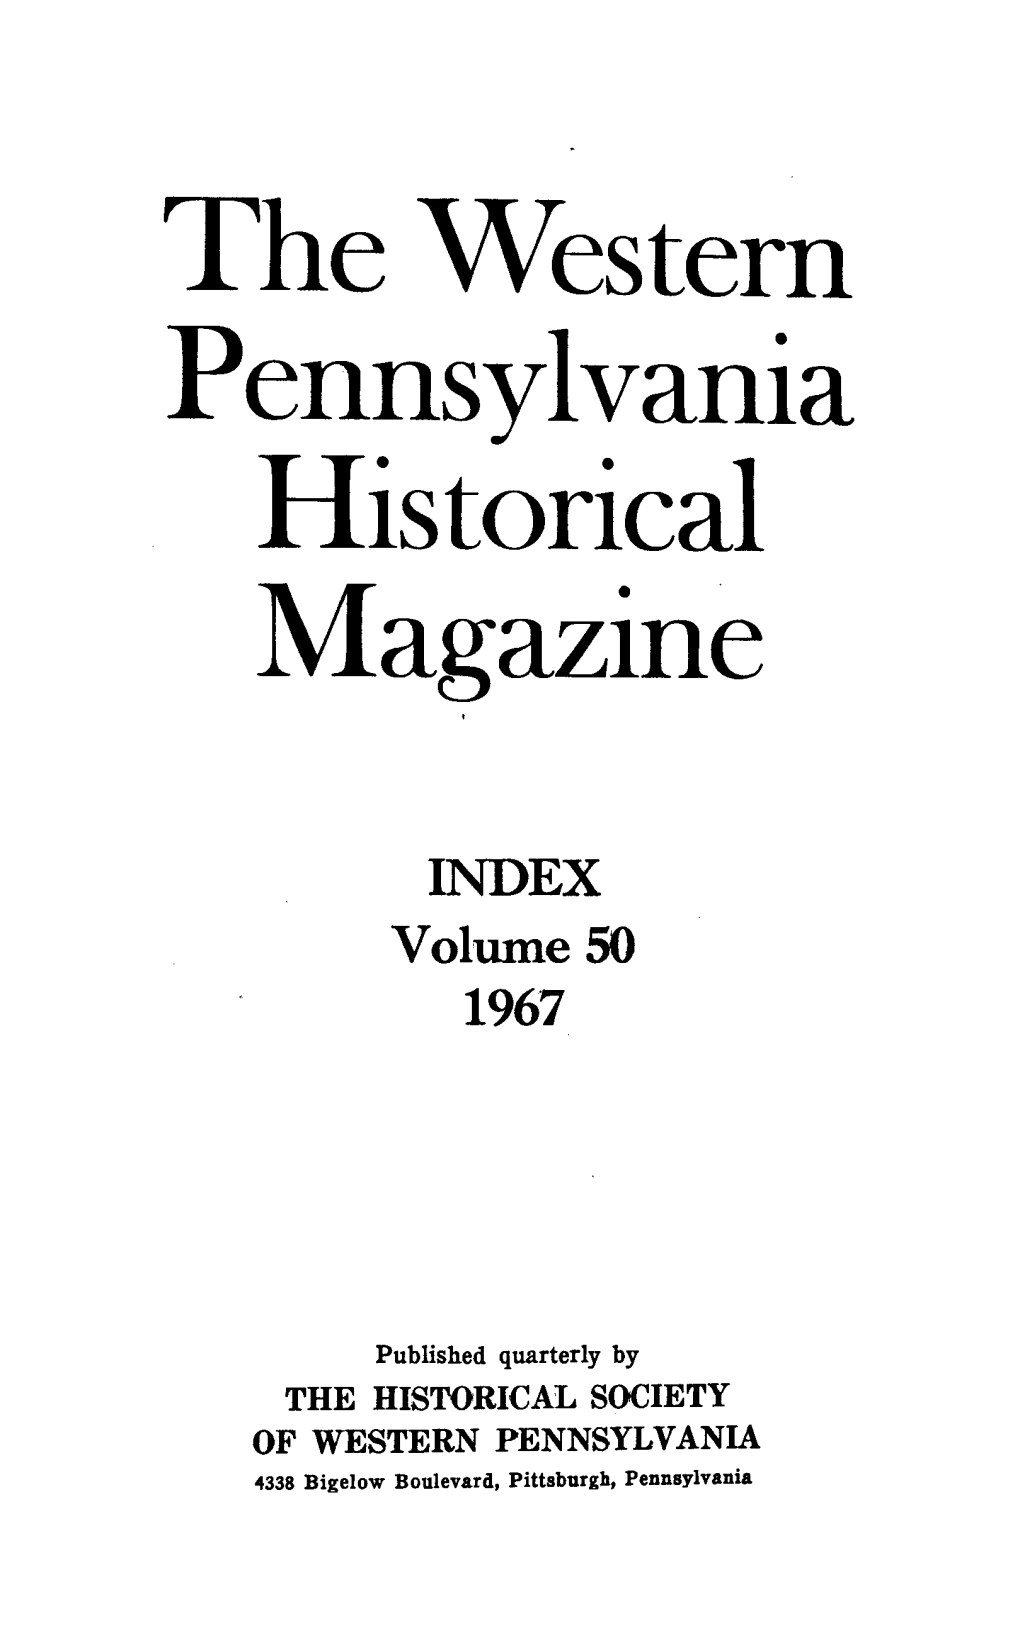 The Western Pennsylvania Historical Magazine